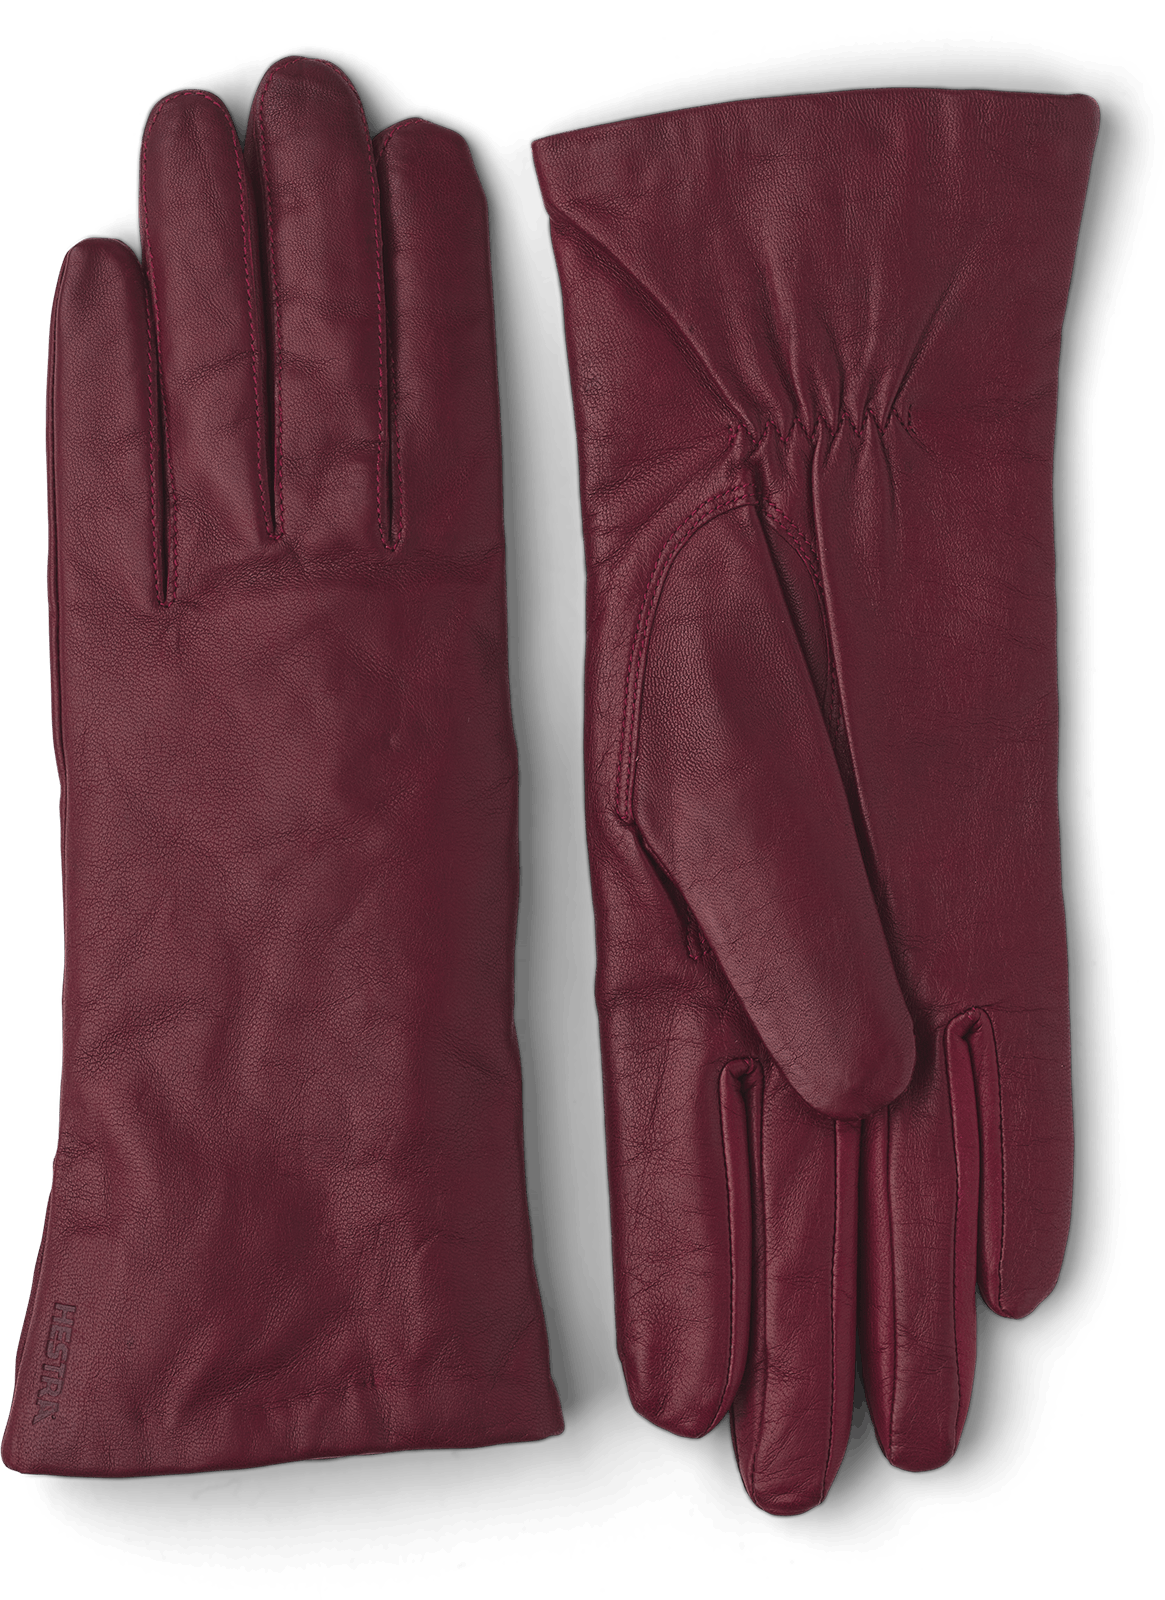 Hestra  ELISABETH gloves / women